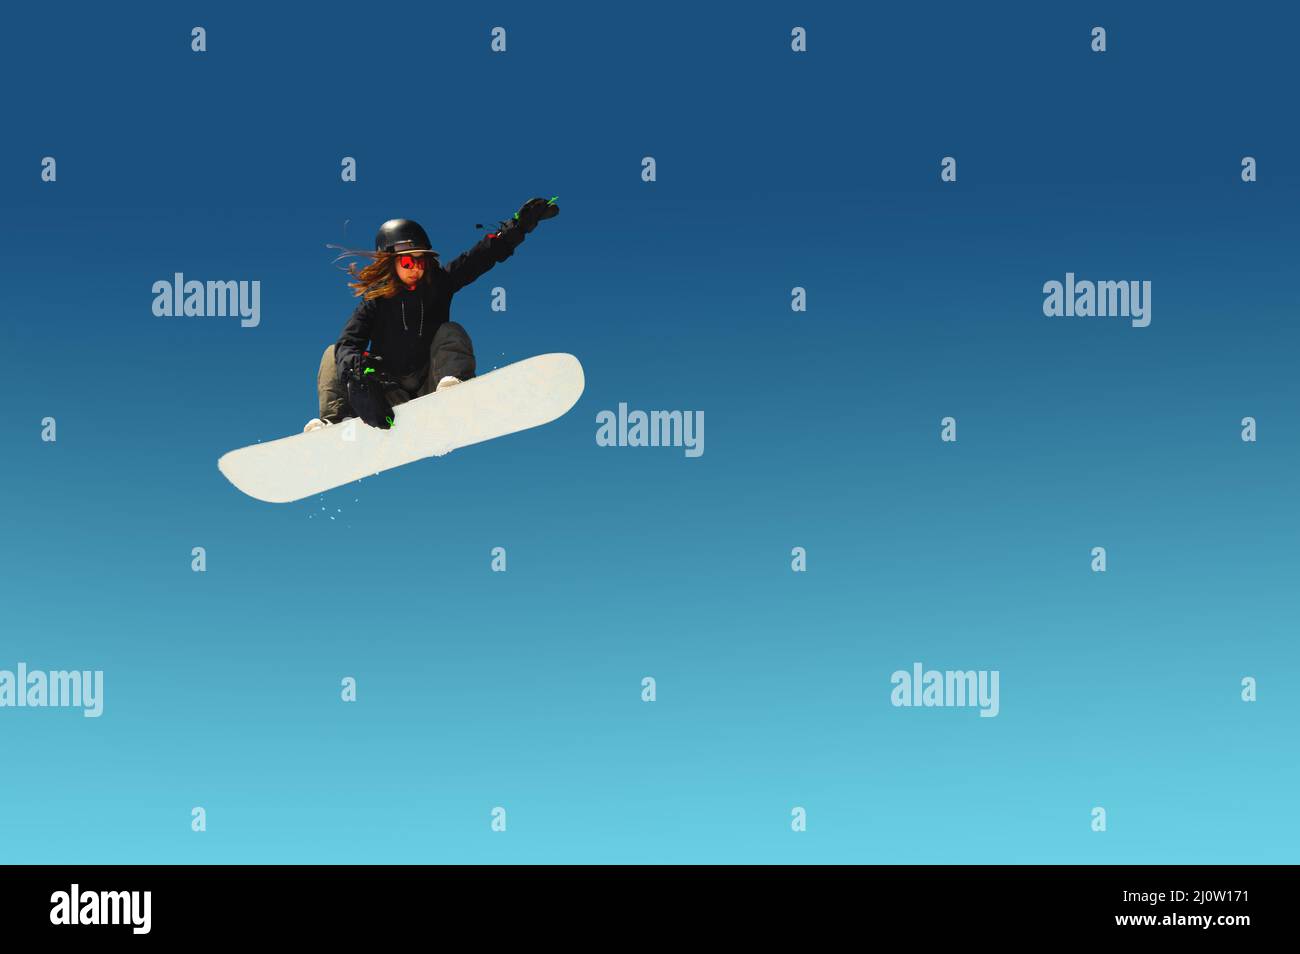 Girl snowboarder in flight after jumping amid blue sky gradient blank designer winter snowboarding sport Stock Photo